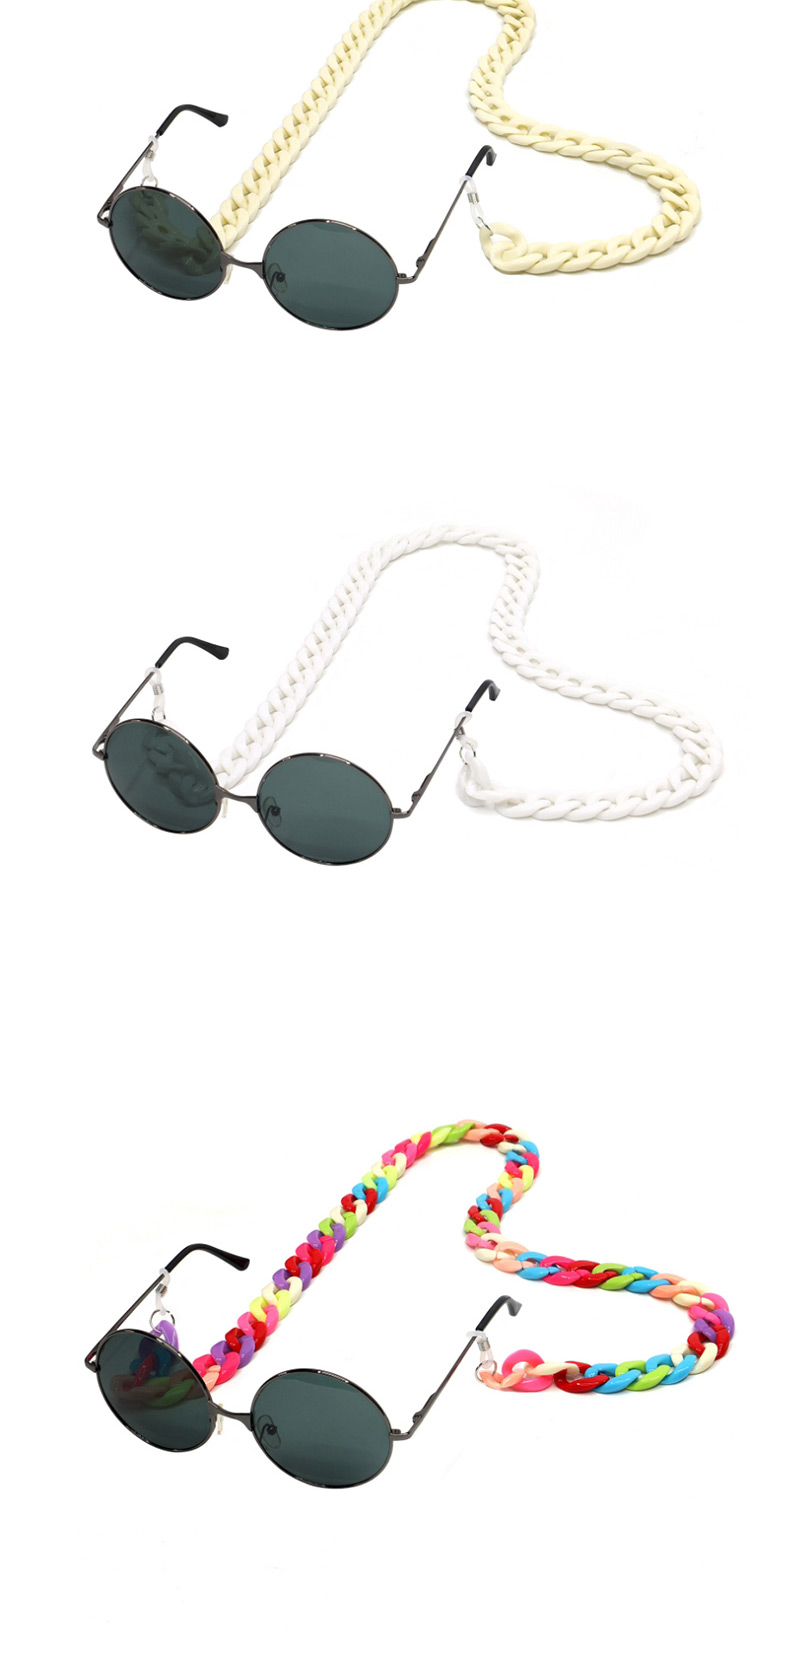  Grass Green Acrylic Glasses Chain,Sunglasses Chain